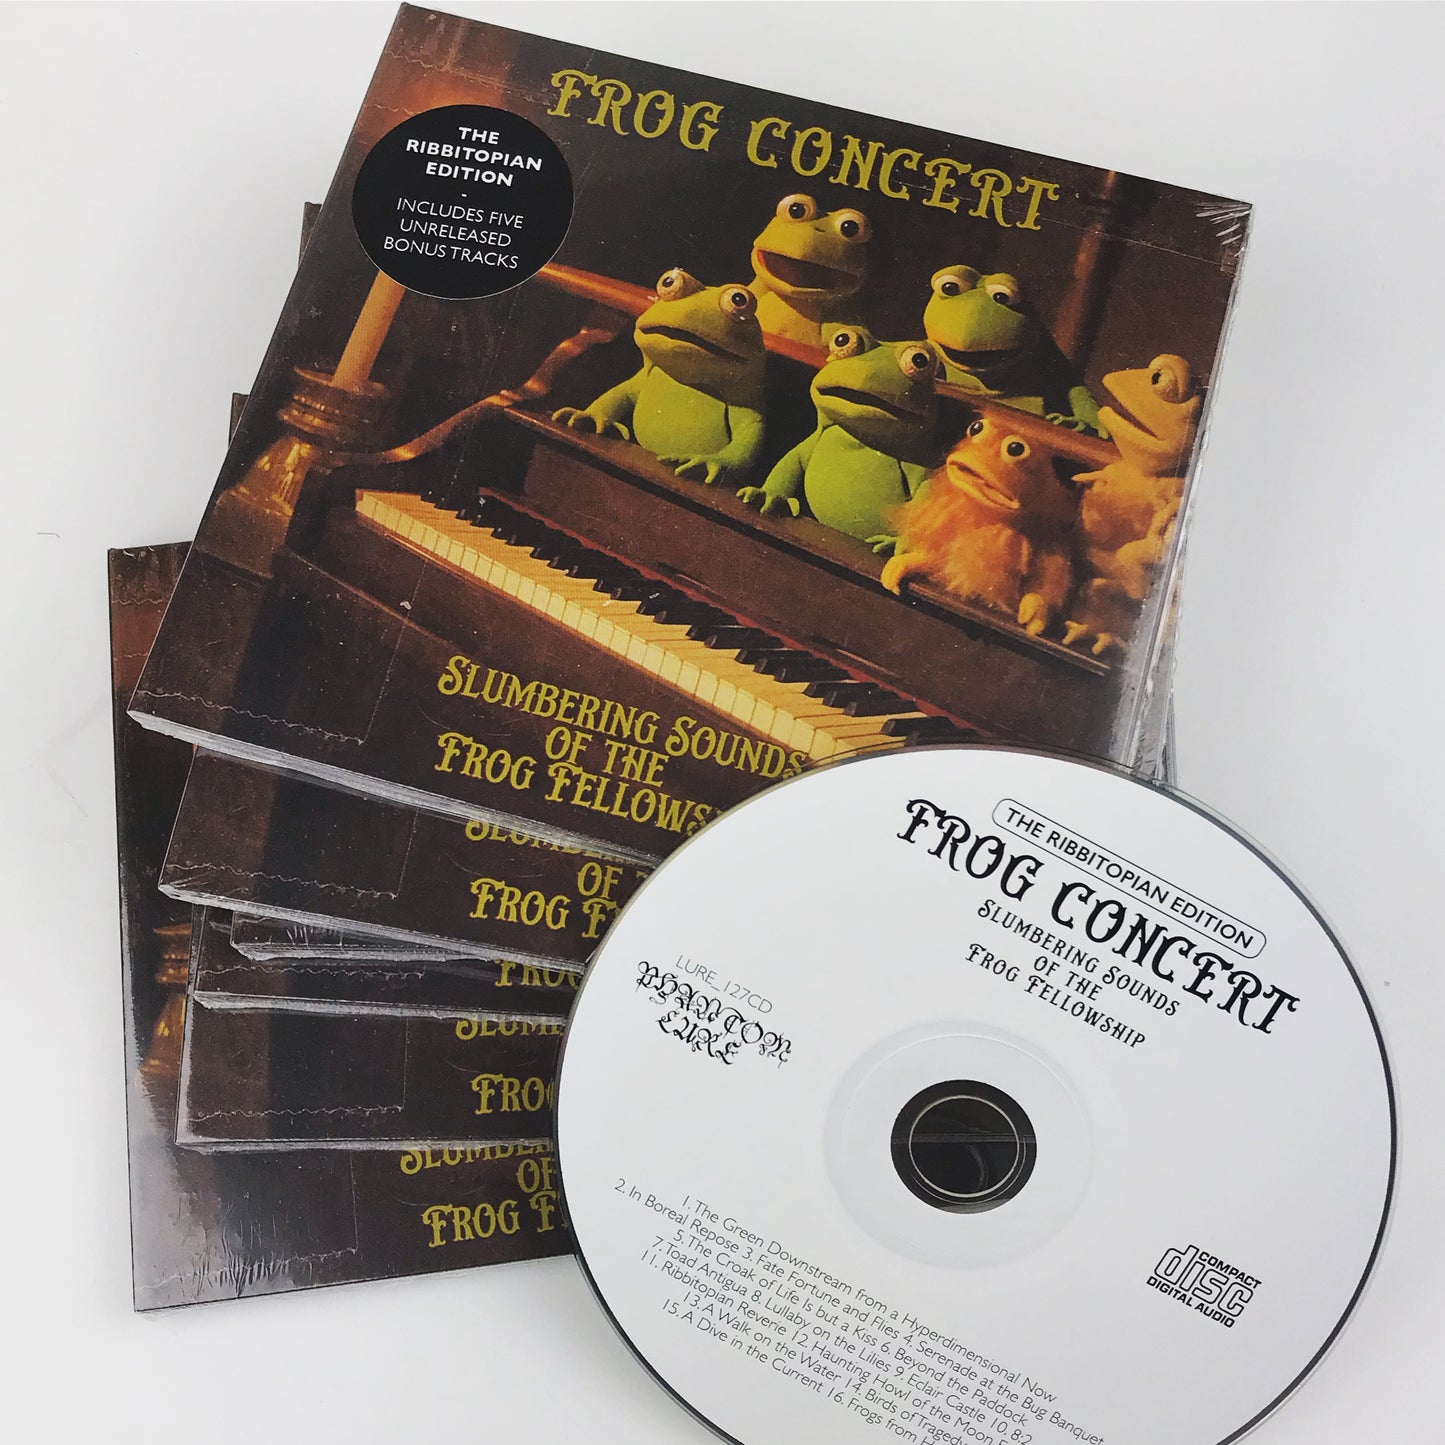 FROG CONCERT - Slumbering Sounds of the Frog Fellowship [CD]